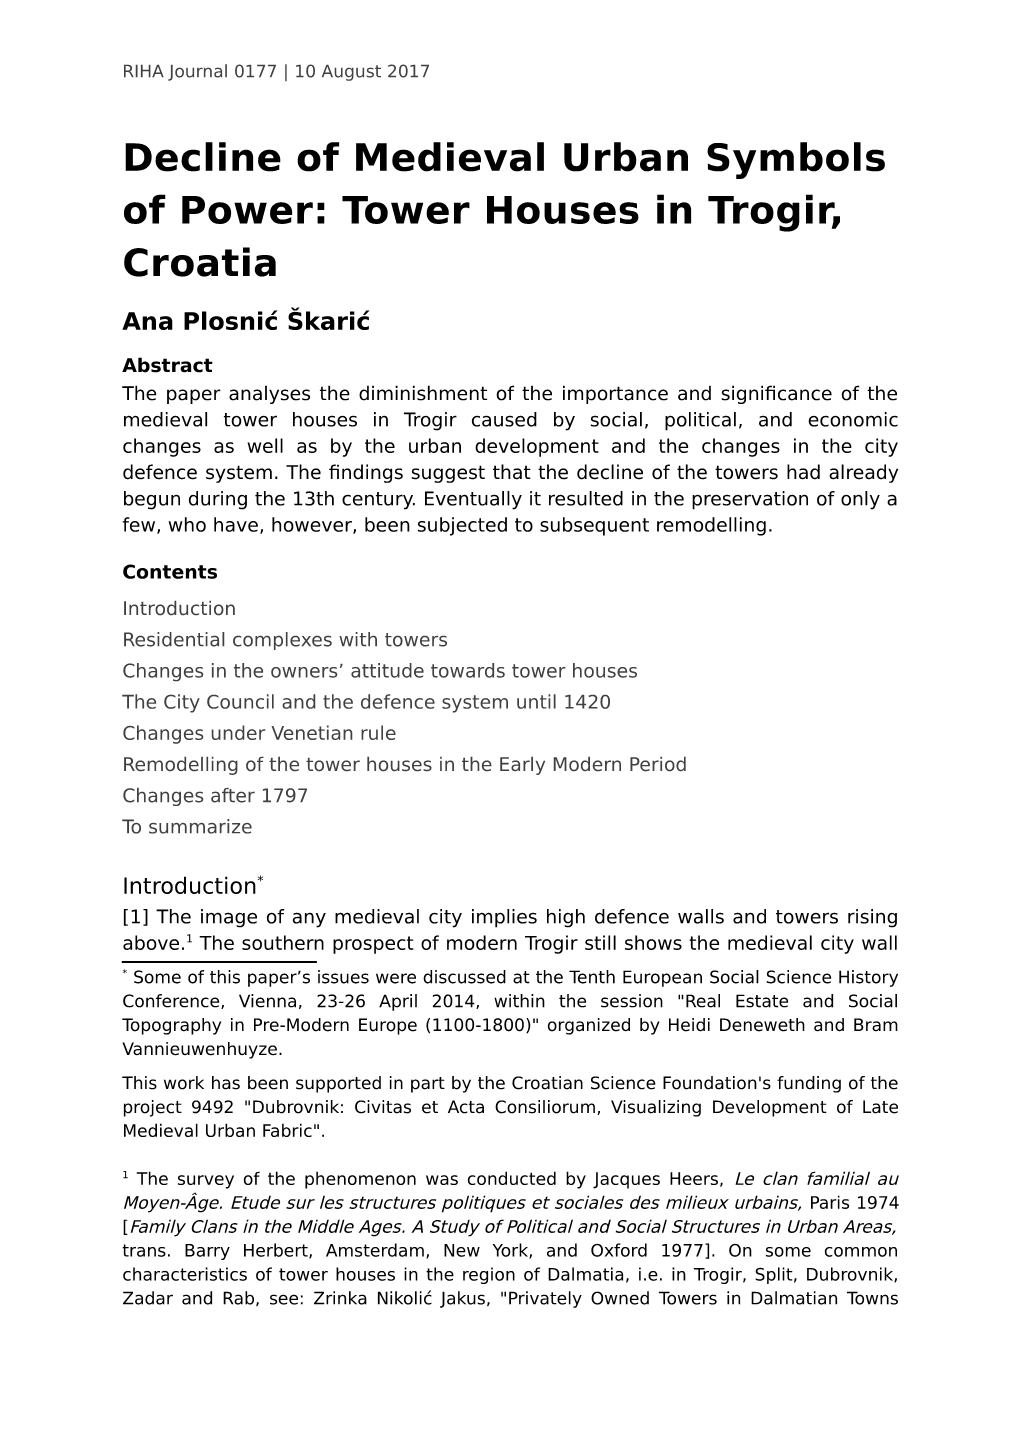 Decline of Medieval Urban Symbols of Power: Tower Houses in Trogir, Croatia